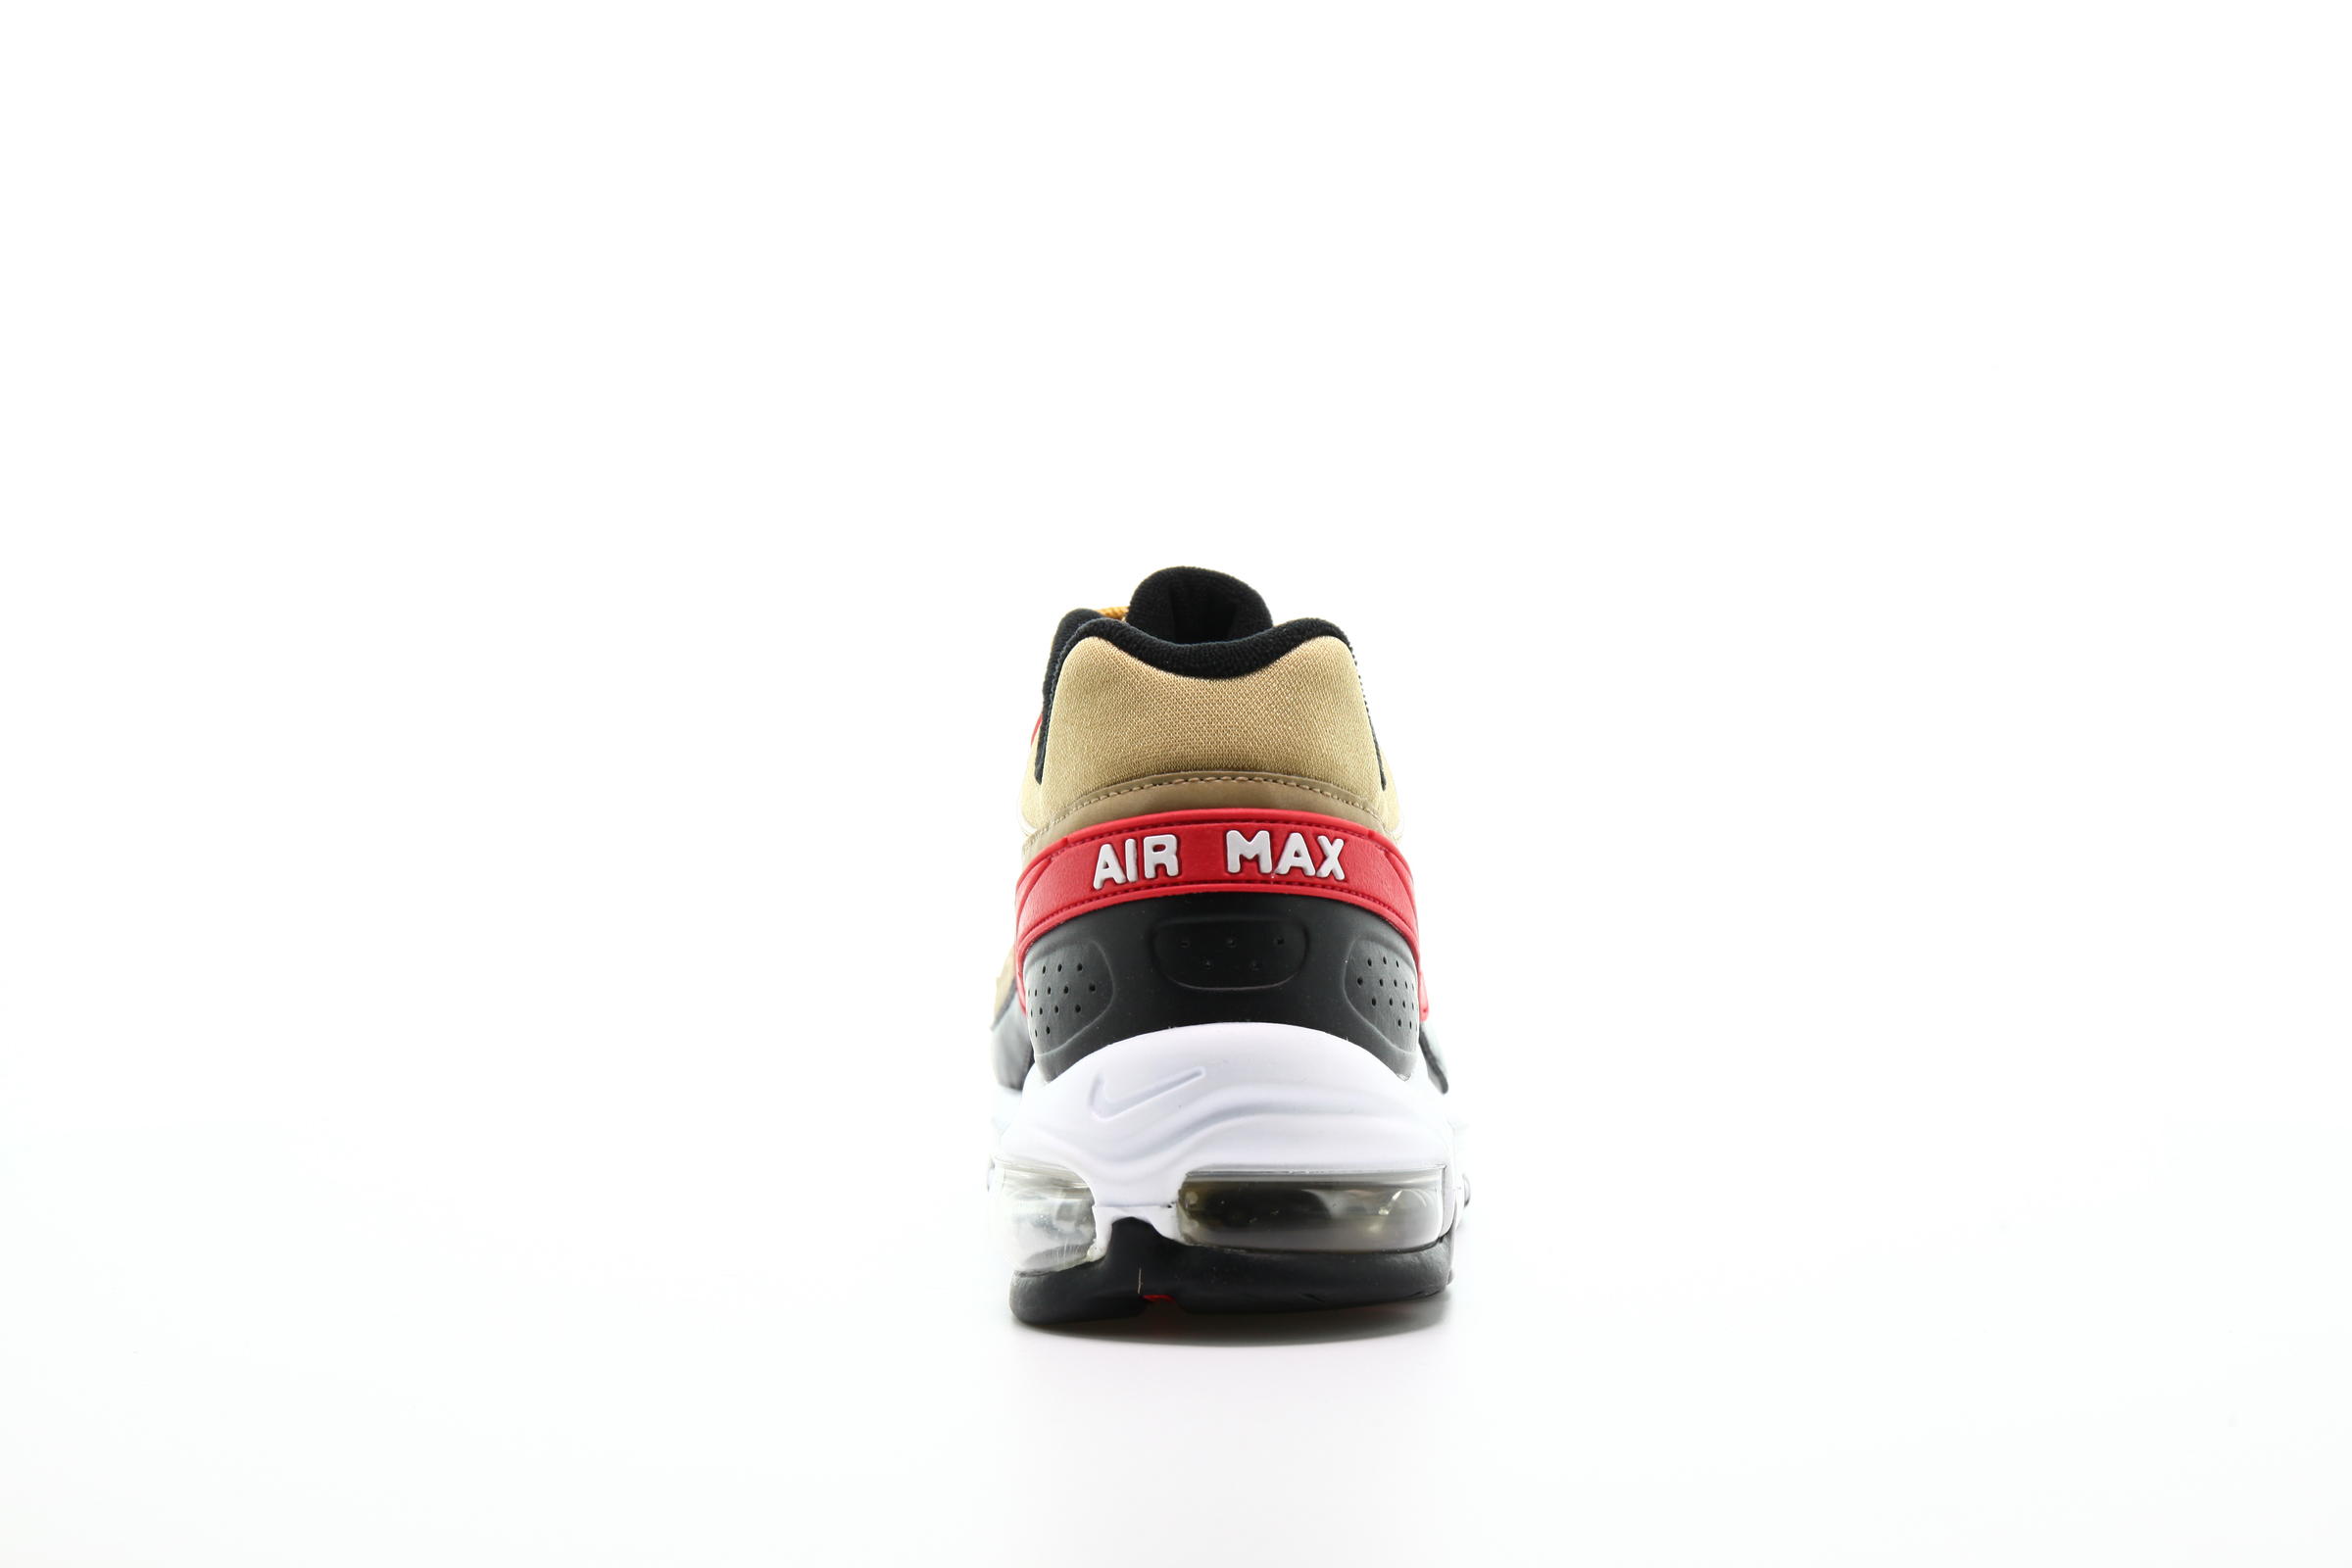 Nike Air Max 97/BW "Metallic Gold"